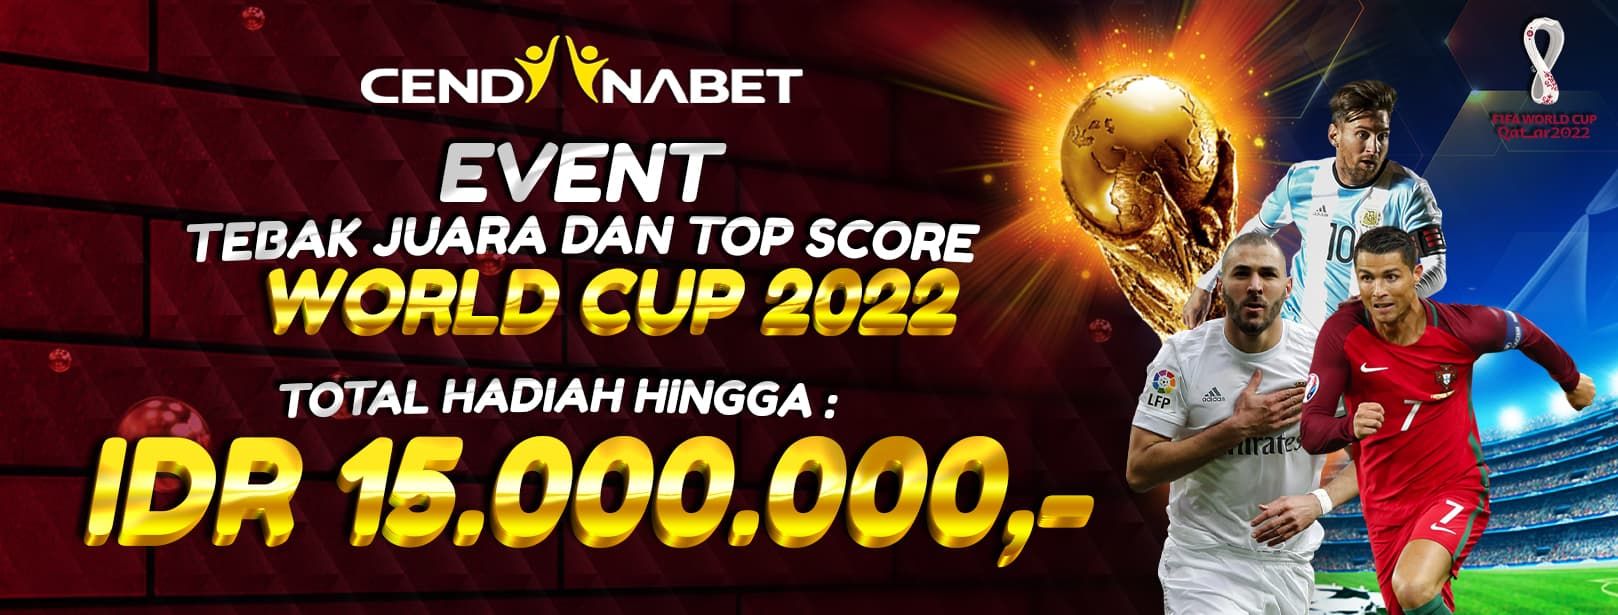 EVENT TEBAK JUARA DAN TOP SCORE WORLD CUP 2022